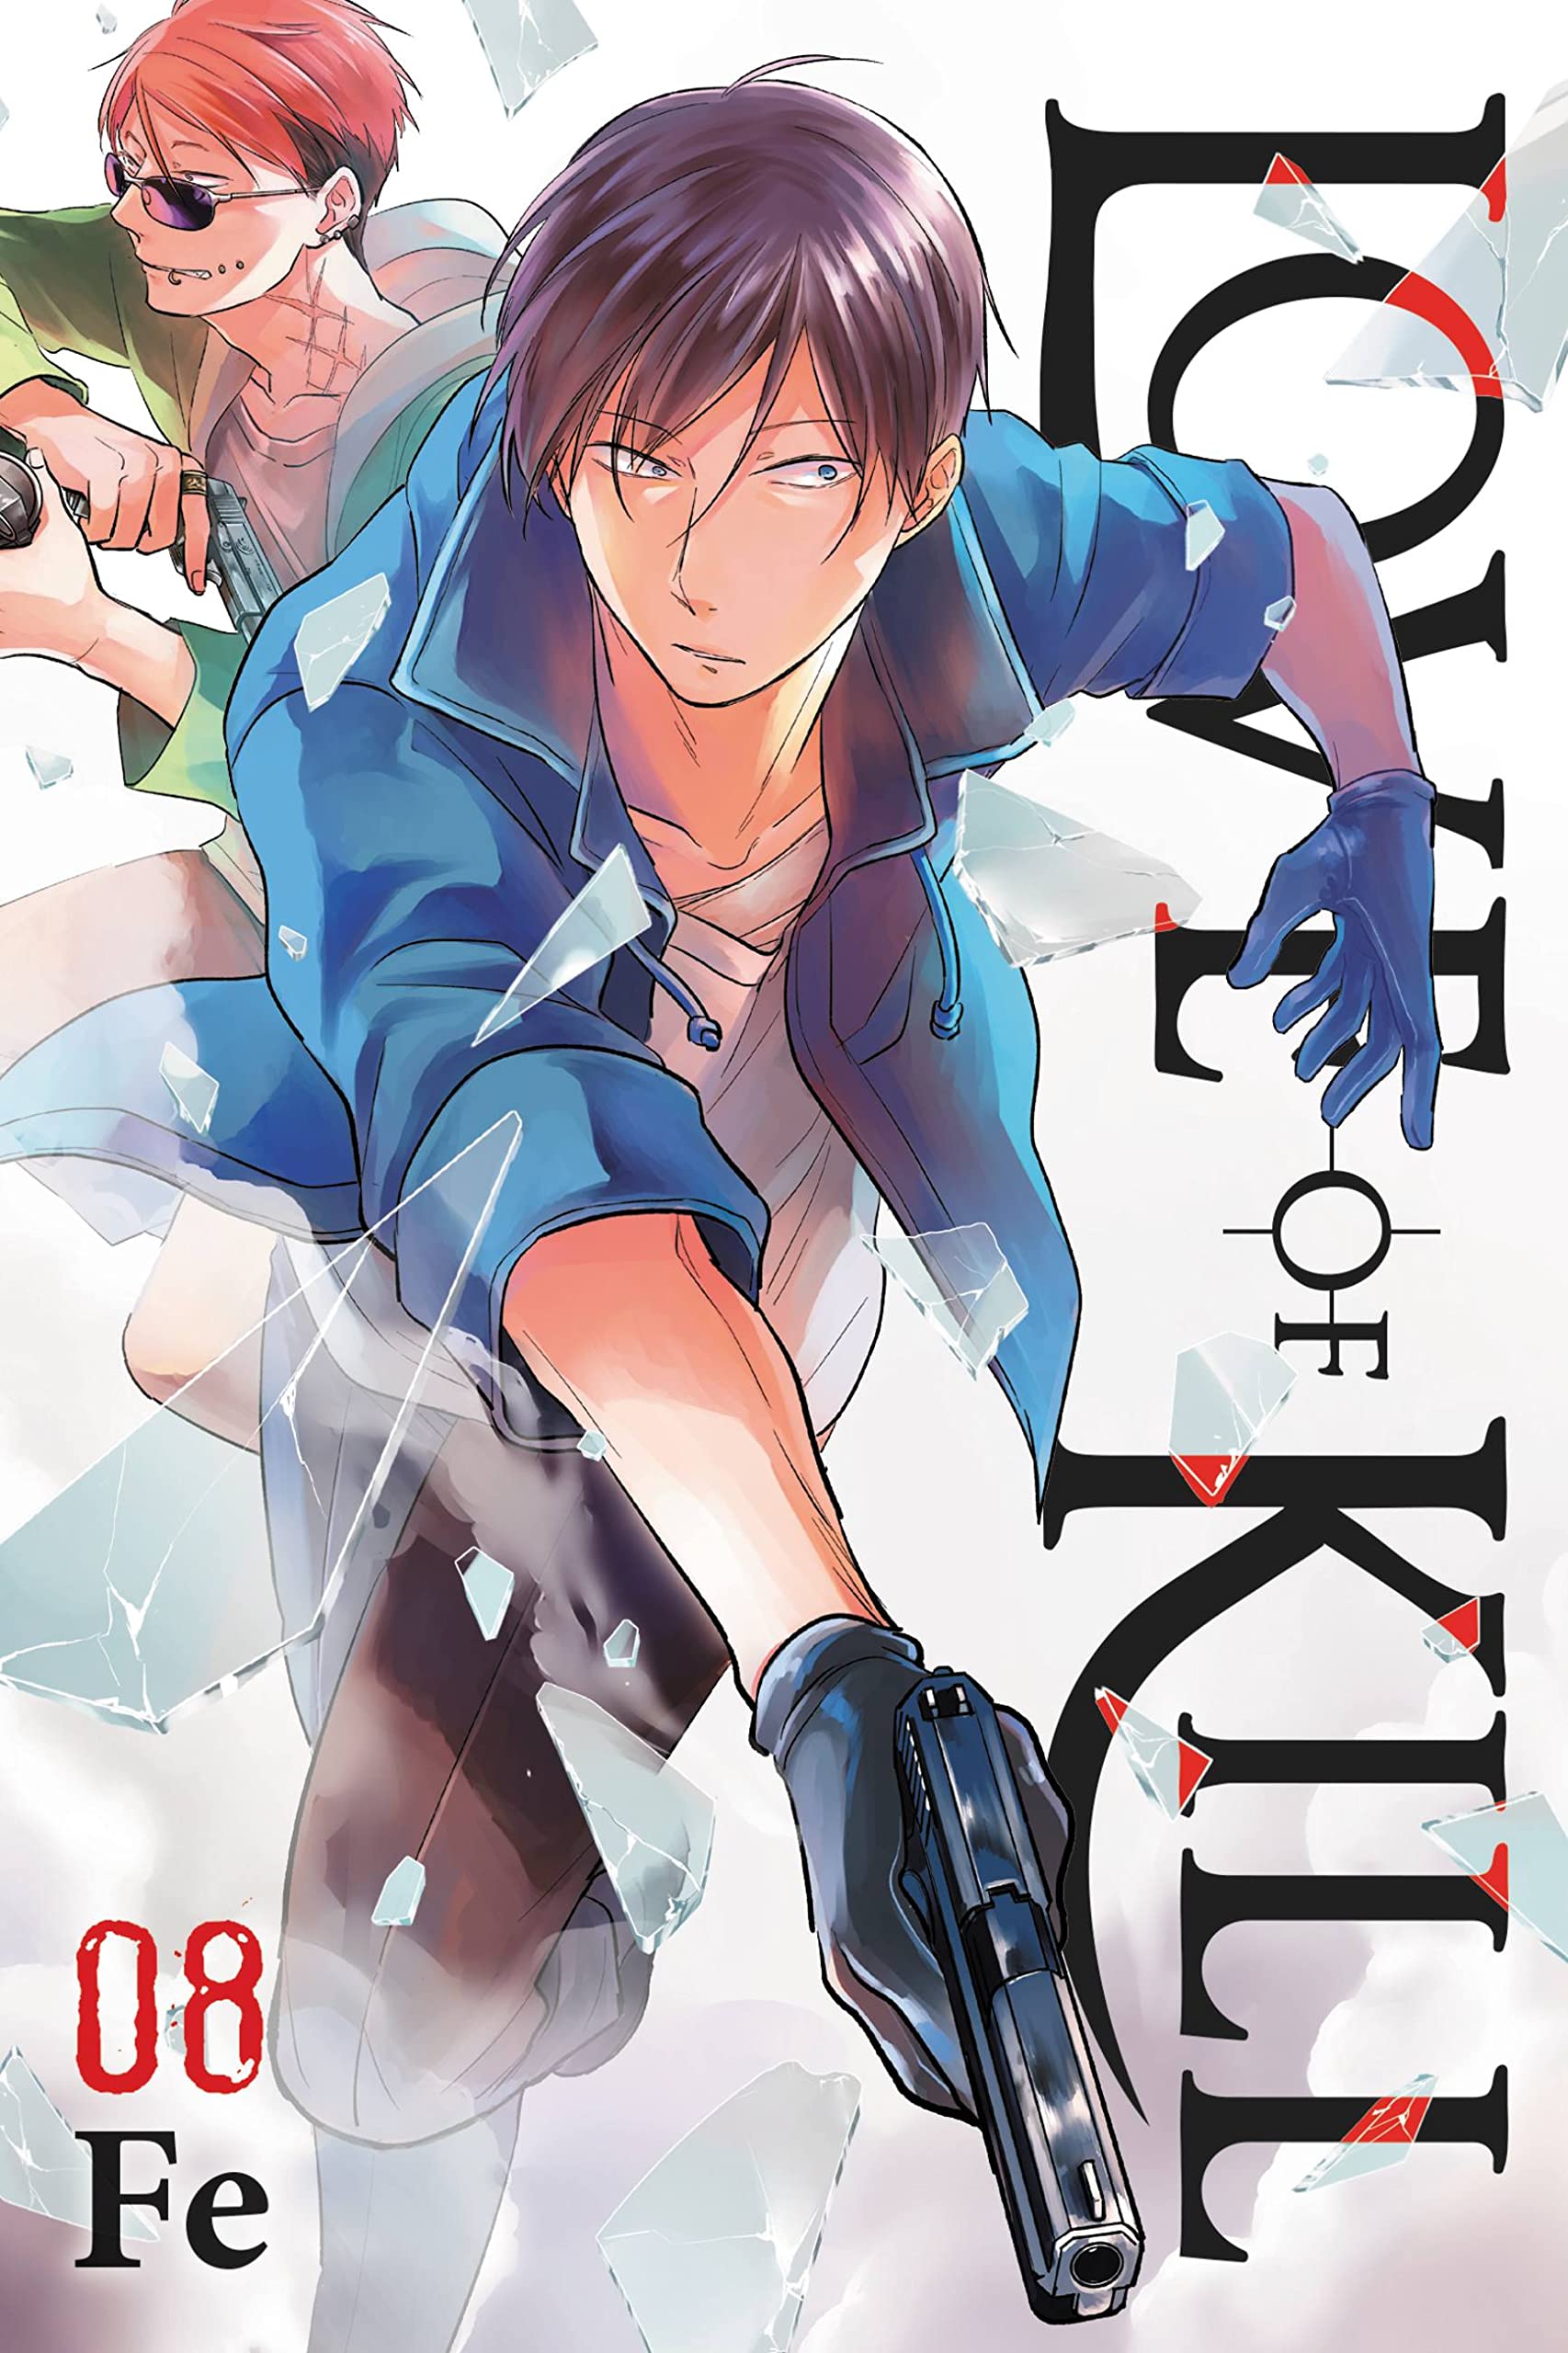 Love Of Kill Volume Comedy, Violence and Bromance [Manga] DarkSkyLady Reviews